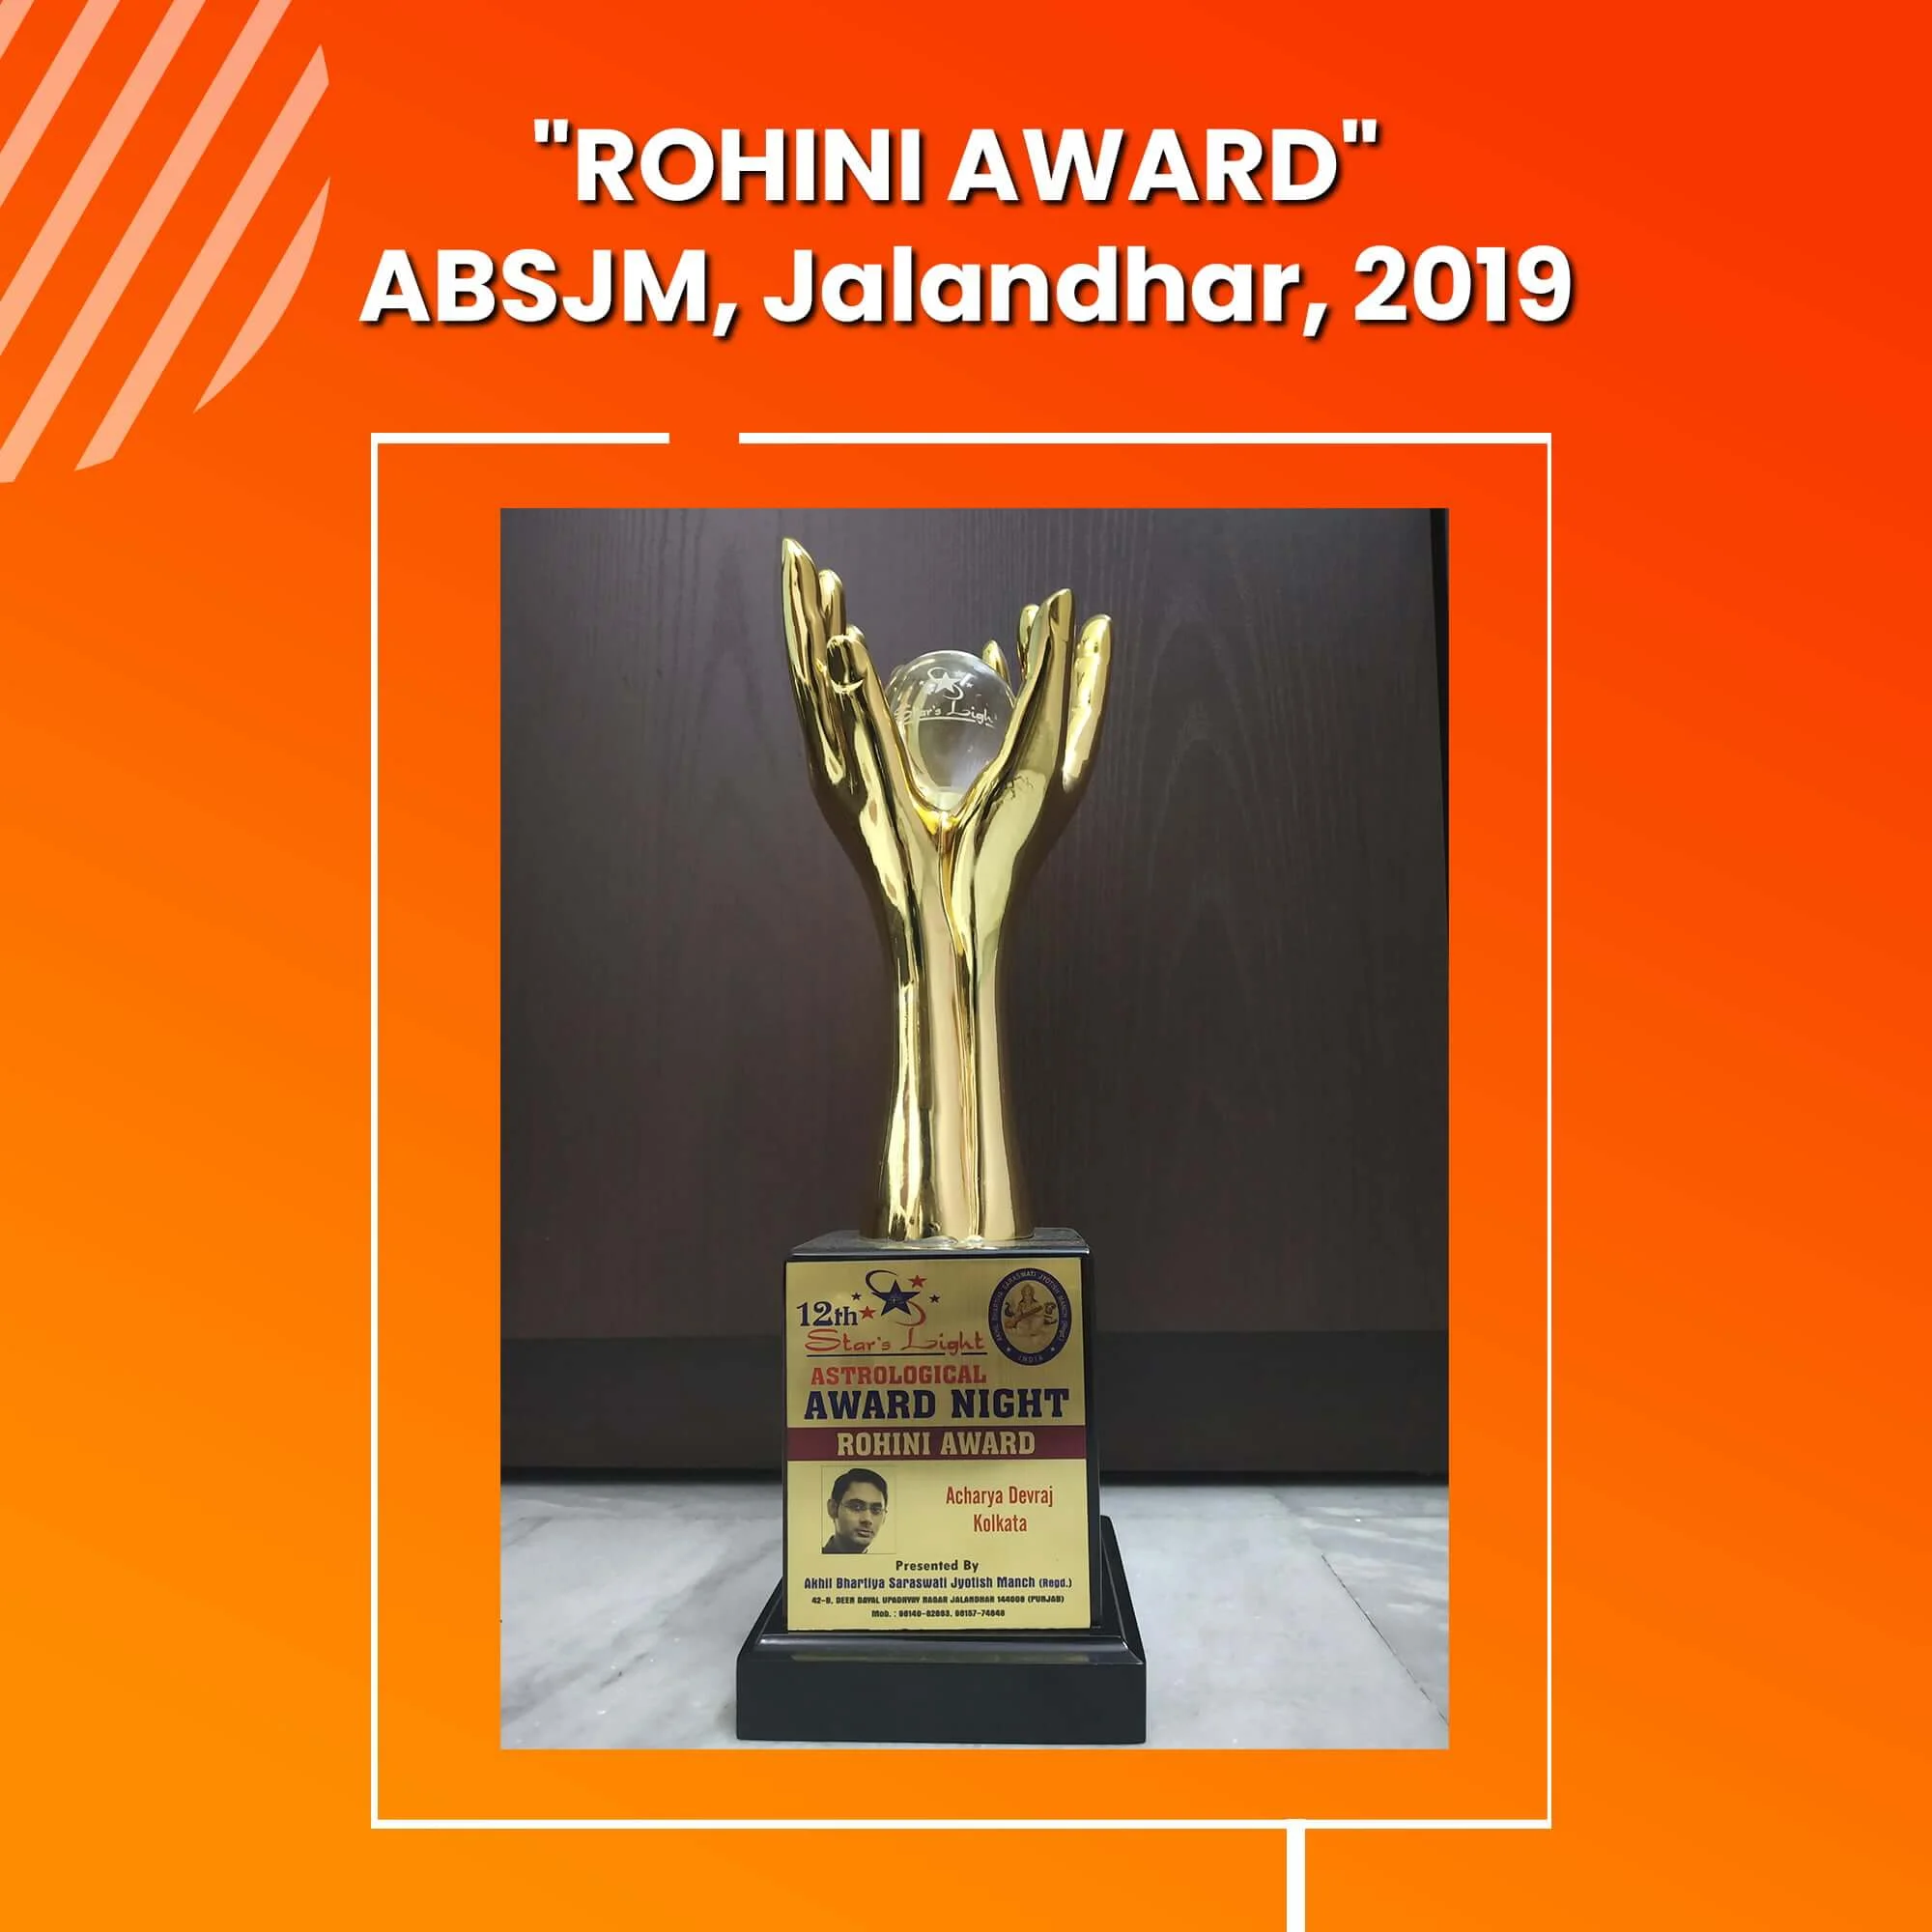 Rohini Award from Jalandhar received by best Astrologer Debraj Acharya practice in Kolkata, Mumbai, Delhi, Bangalore